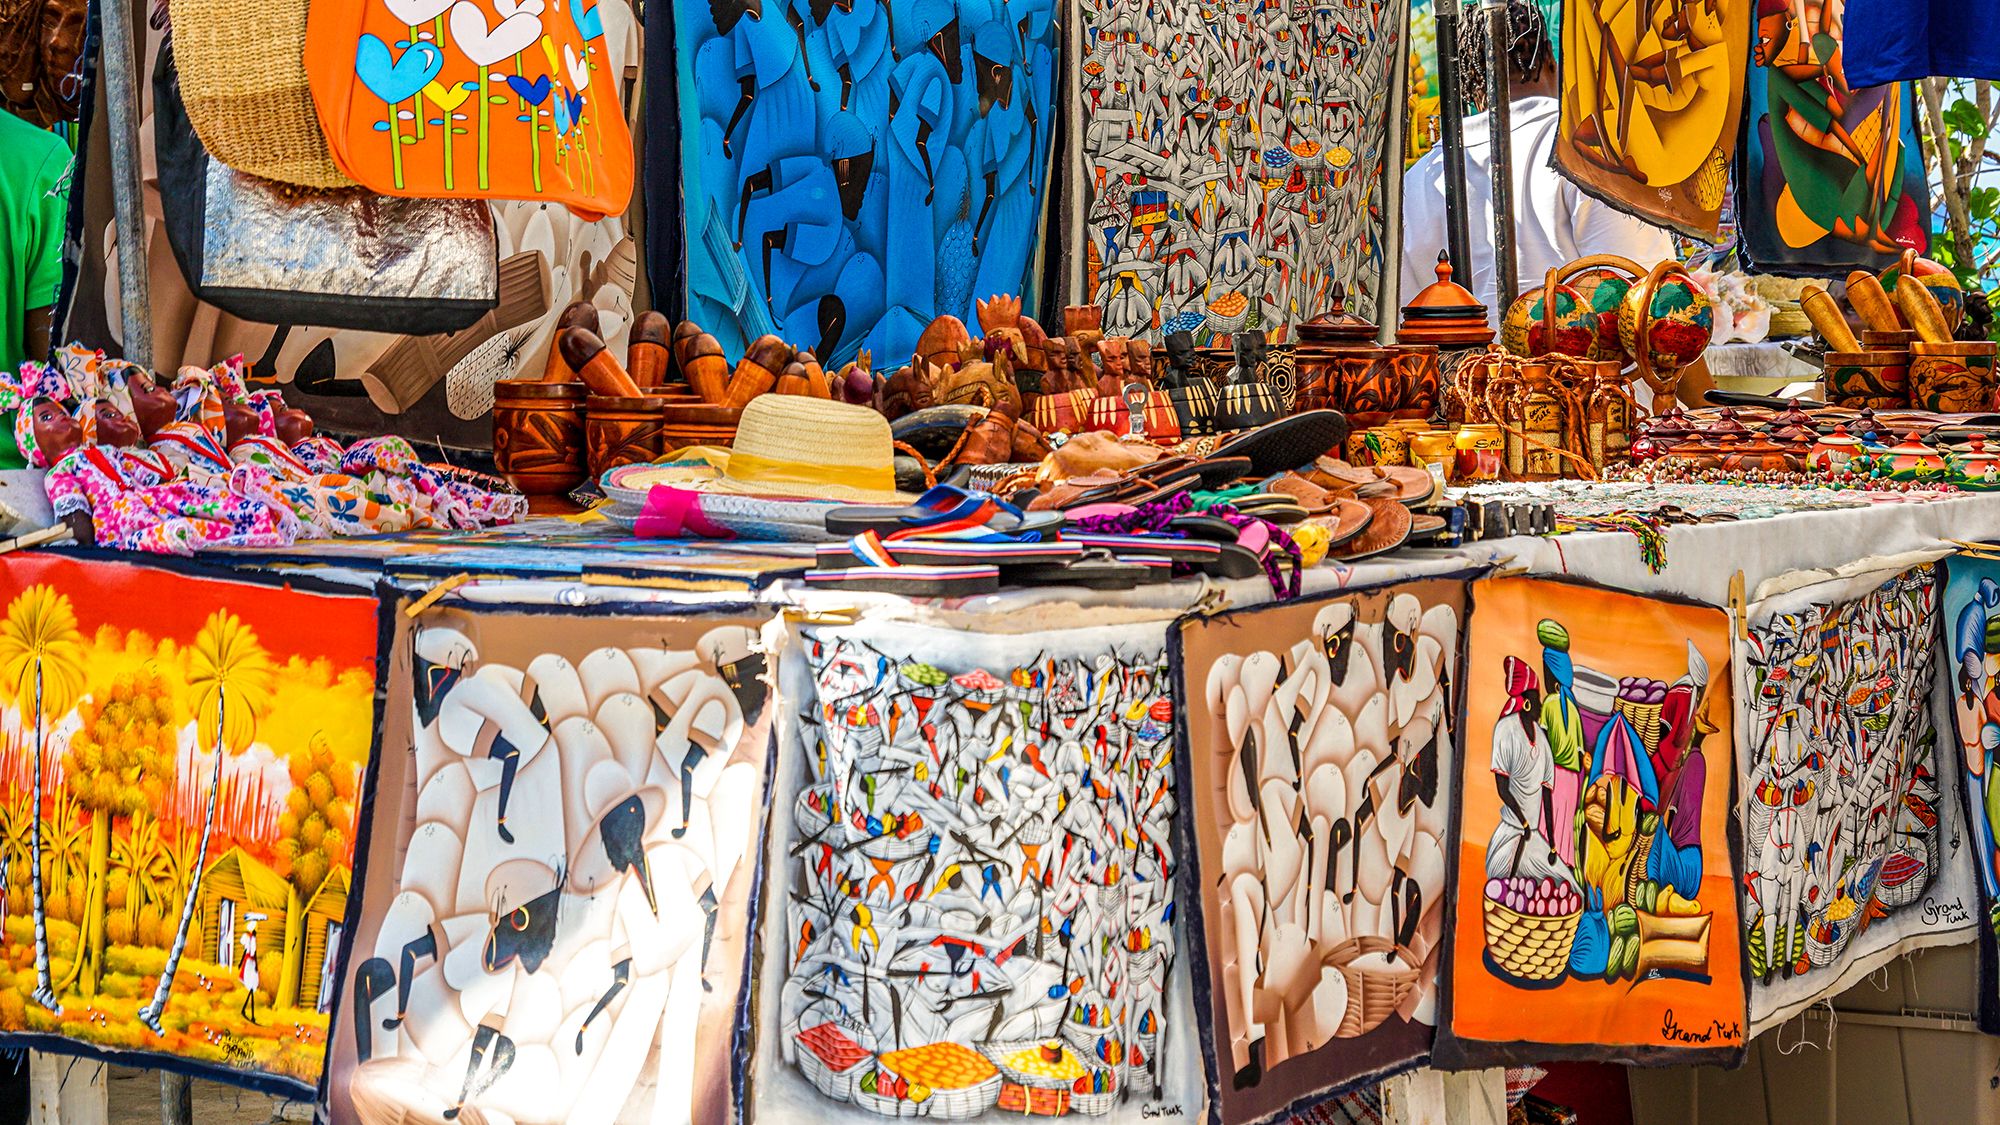 Turks Caicos Market Craft Souvenirs